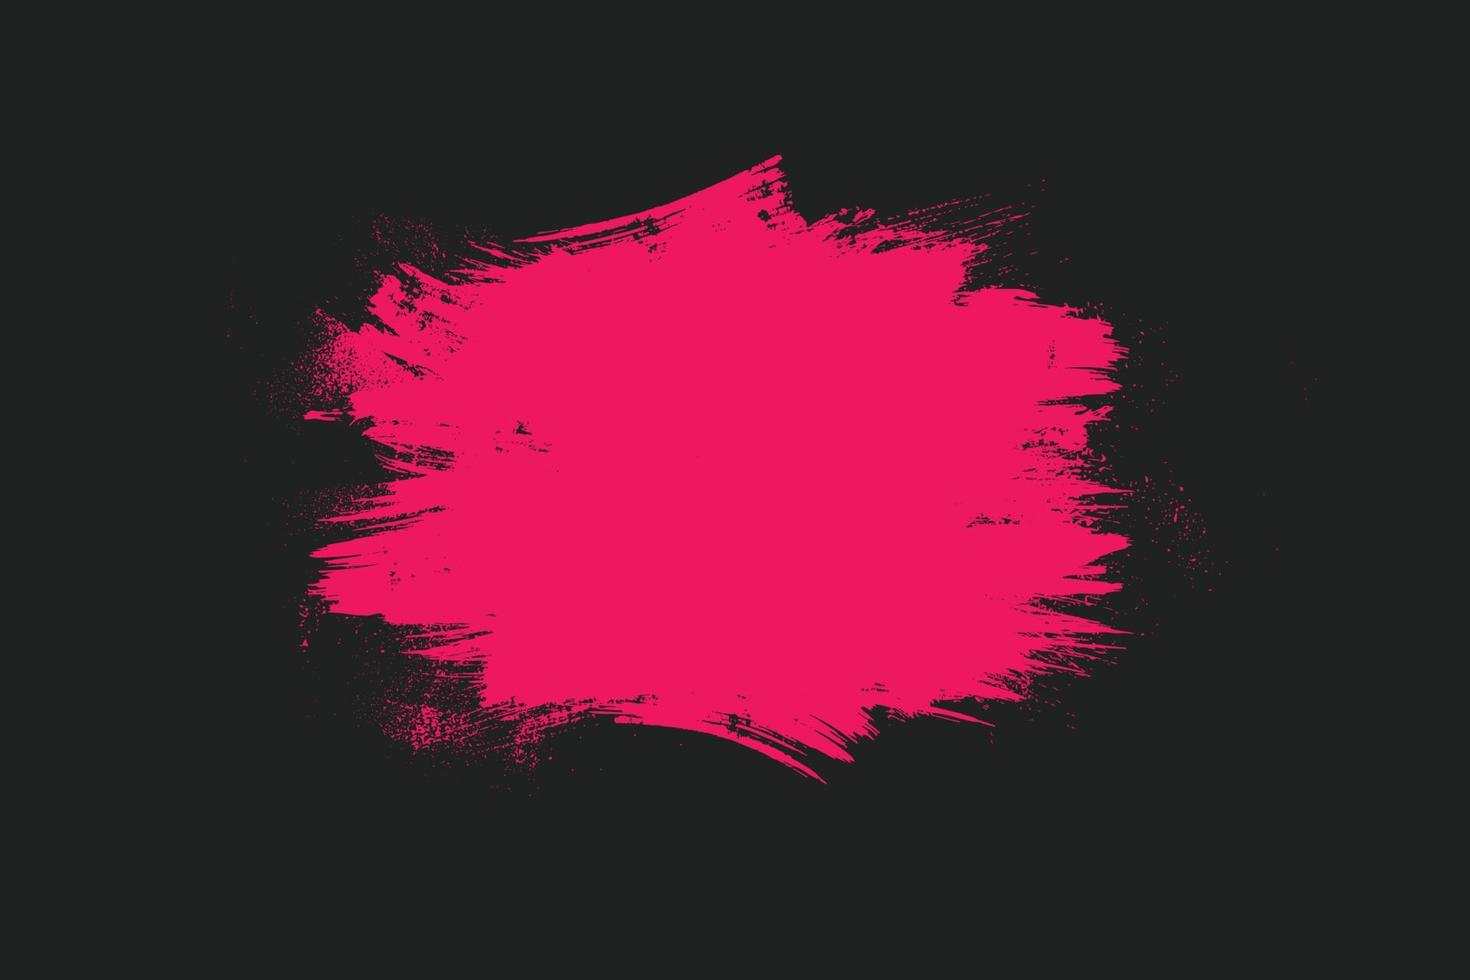 abstrakt grunge rosa borsta stroke på svart bakgrund i urban stil vektor